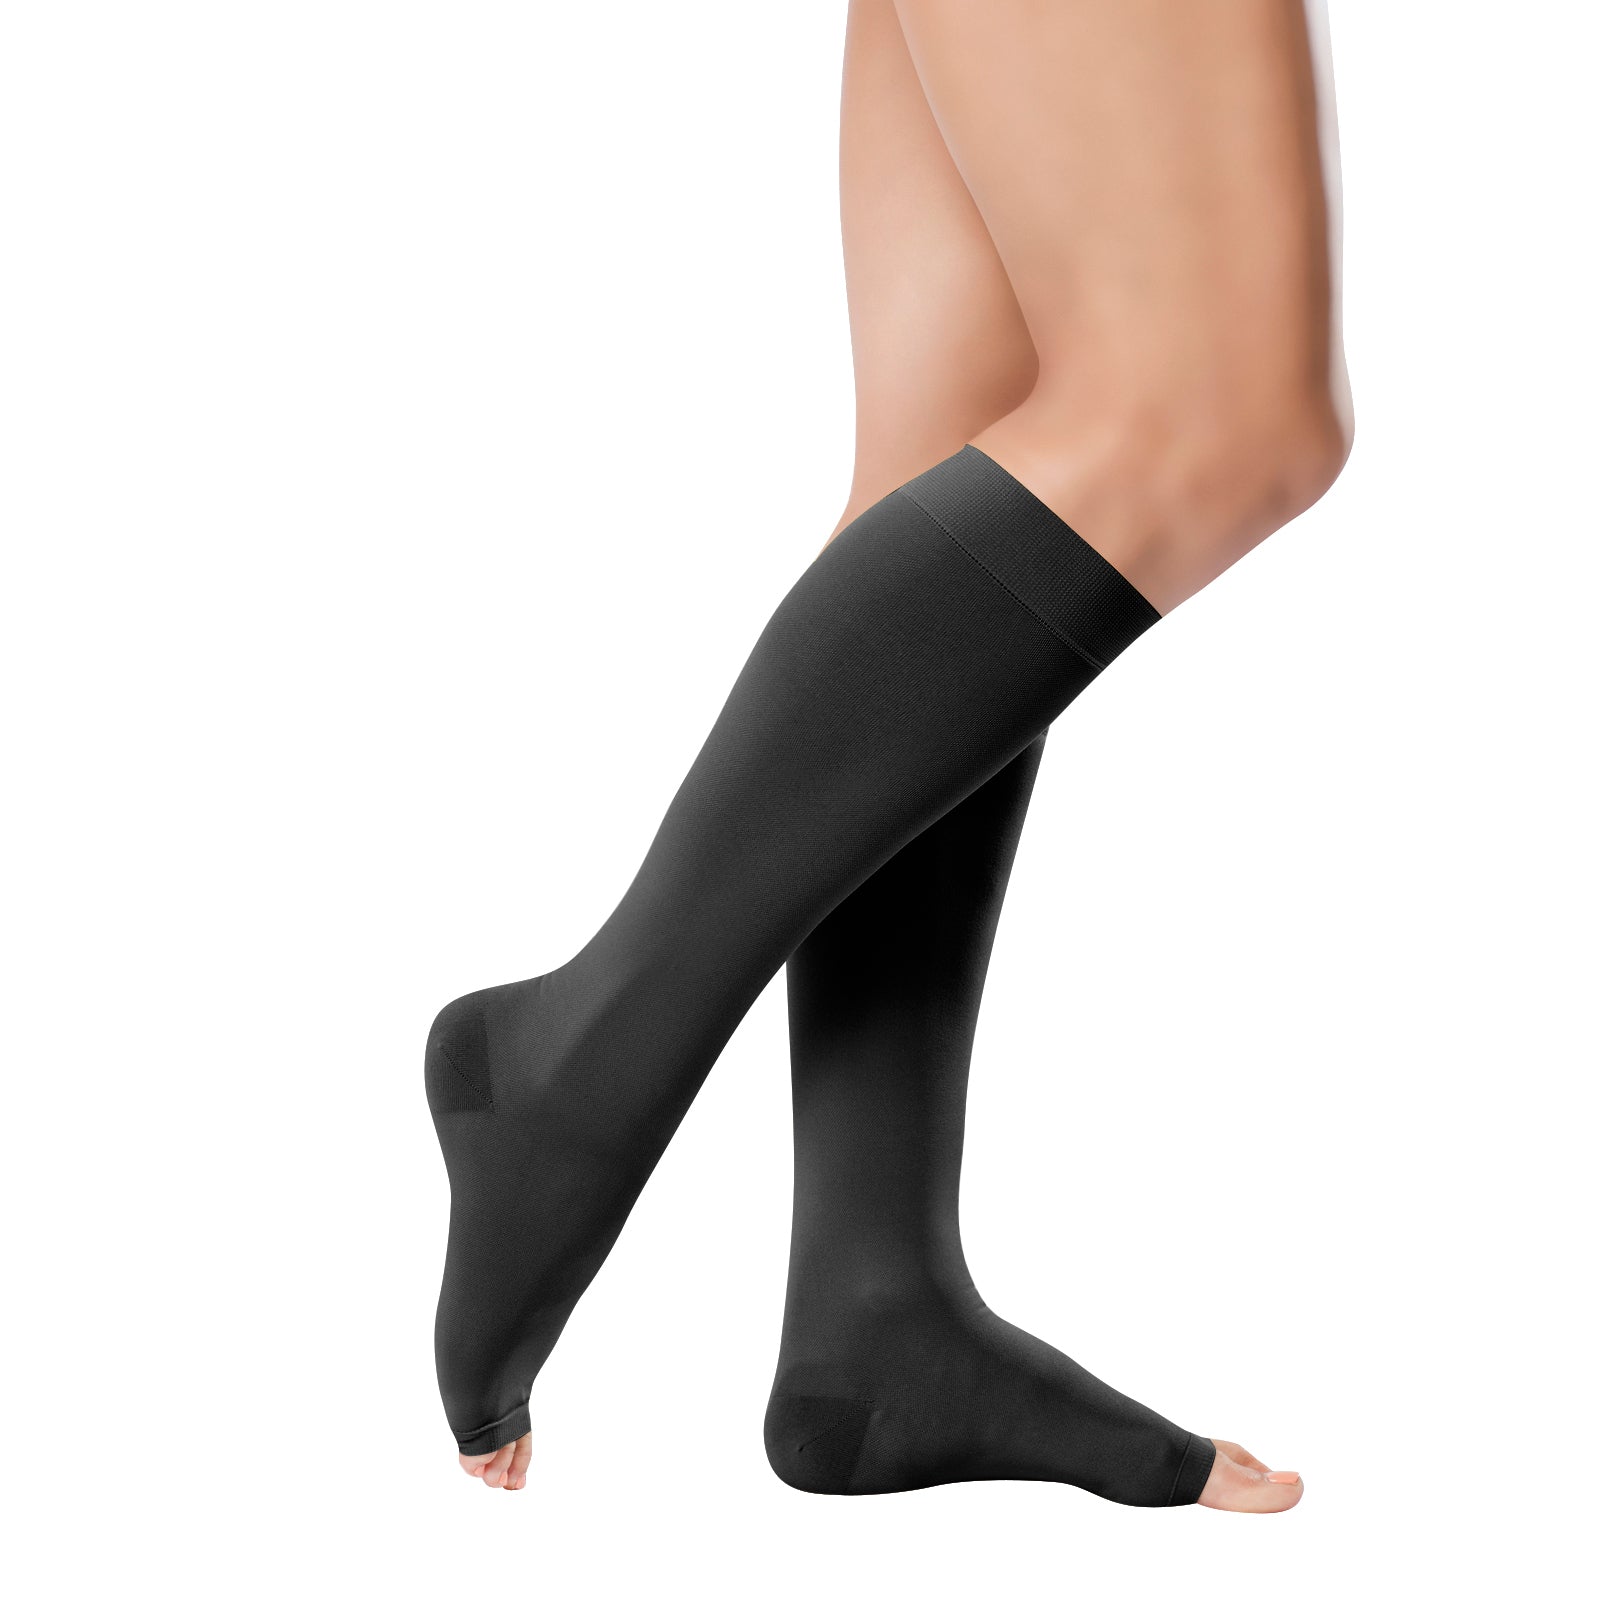 Elastic Toeless Compression Socks Support Open Toe Knee High